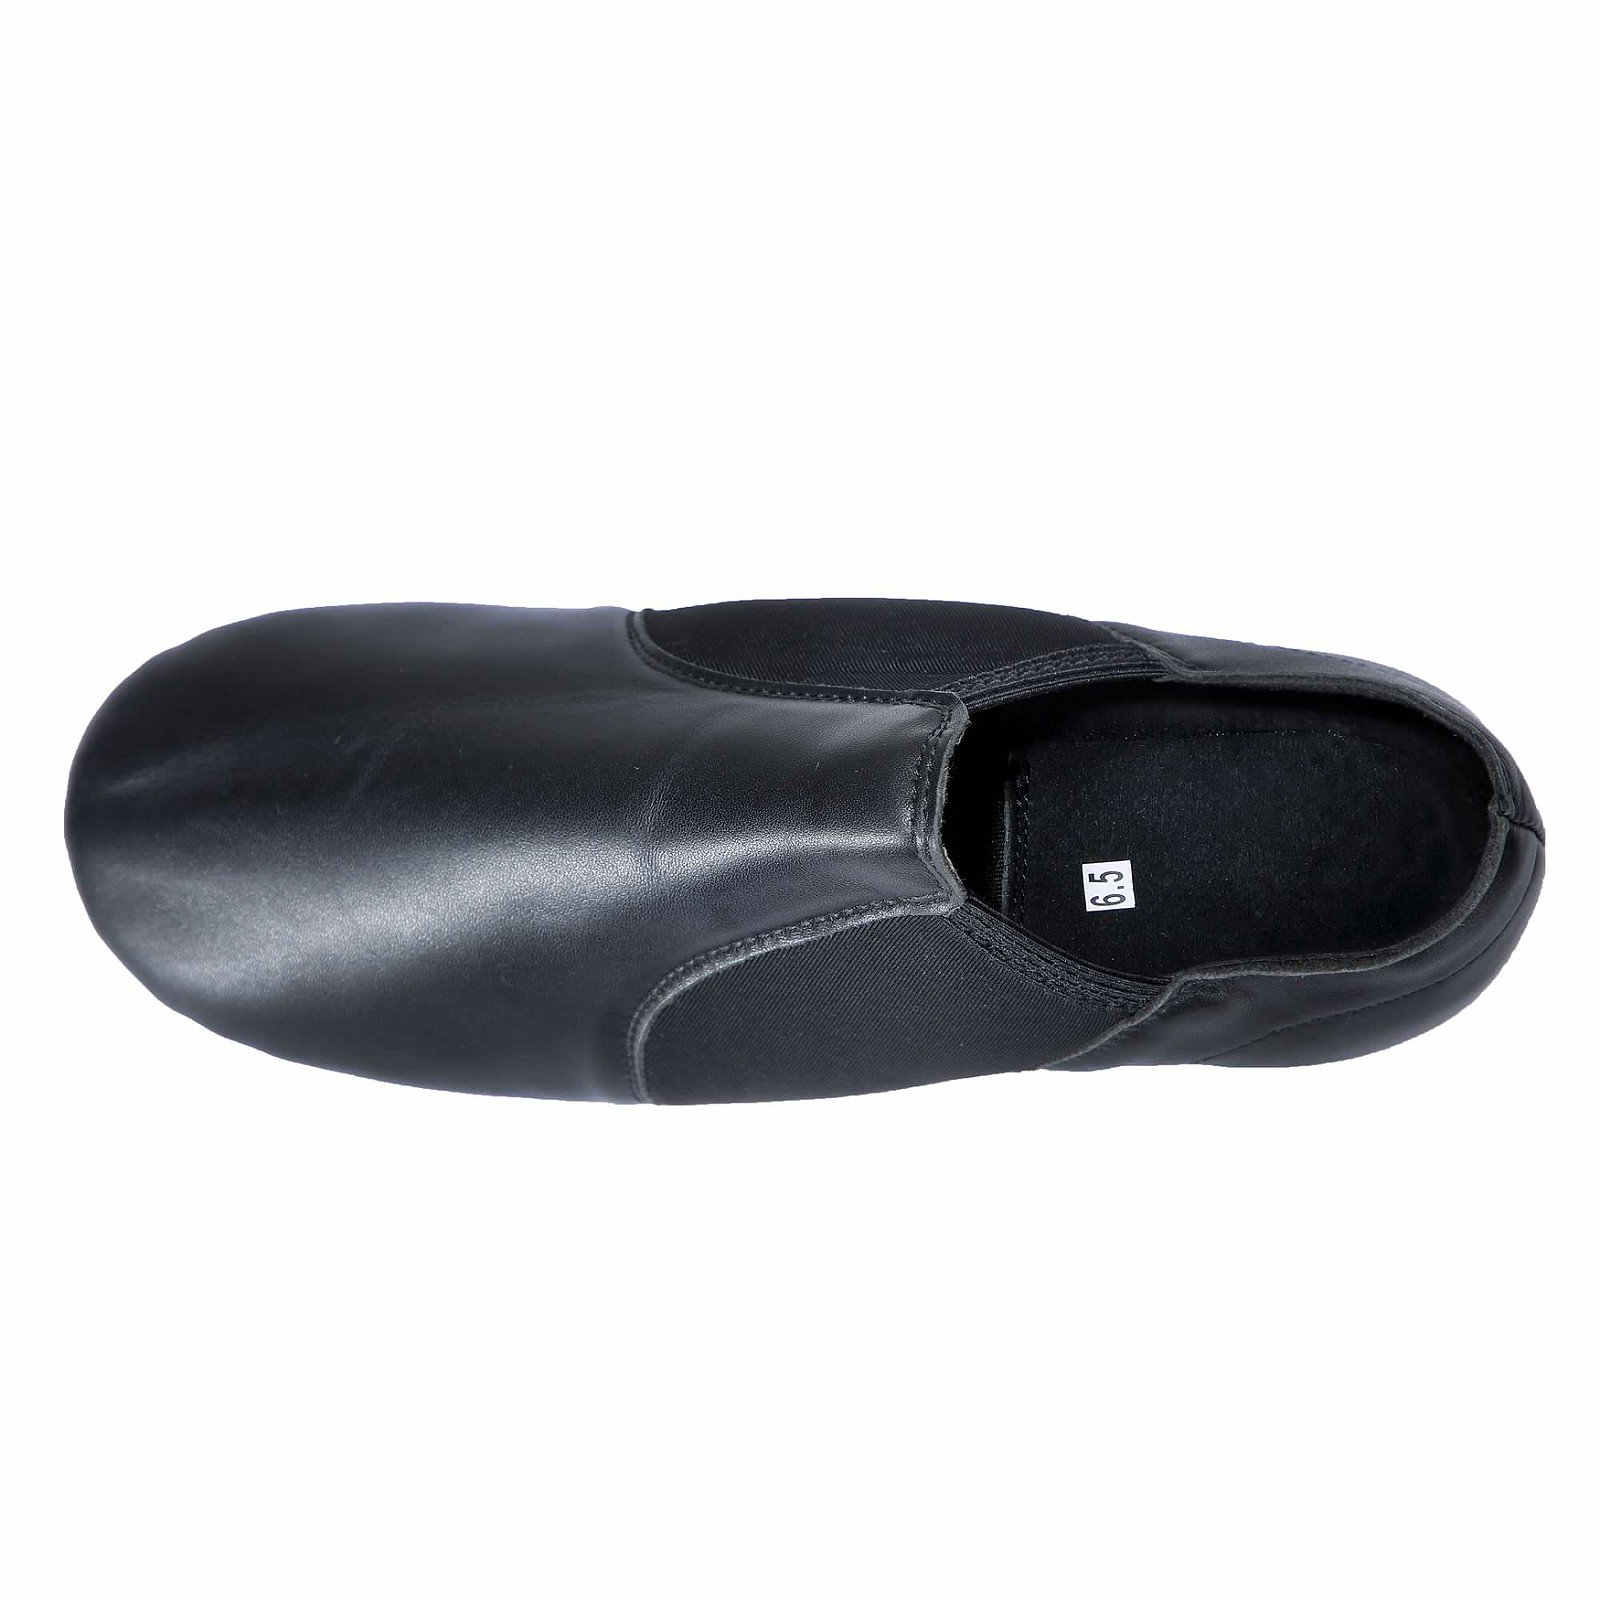 Dynadans Leather Upper Slip-on Jazz Shoe for Girls and Boys (Big Kid/Little Kid/Toddler)